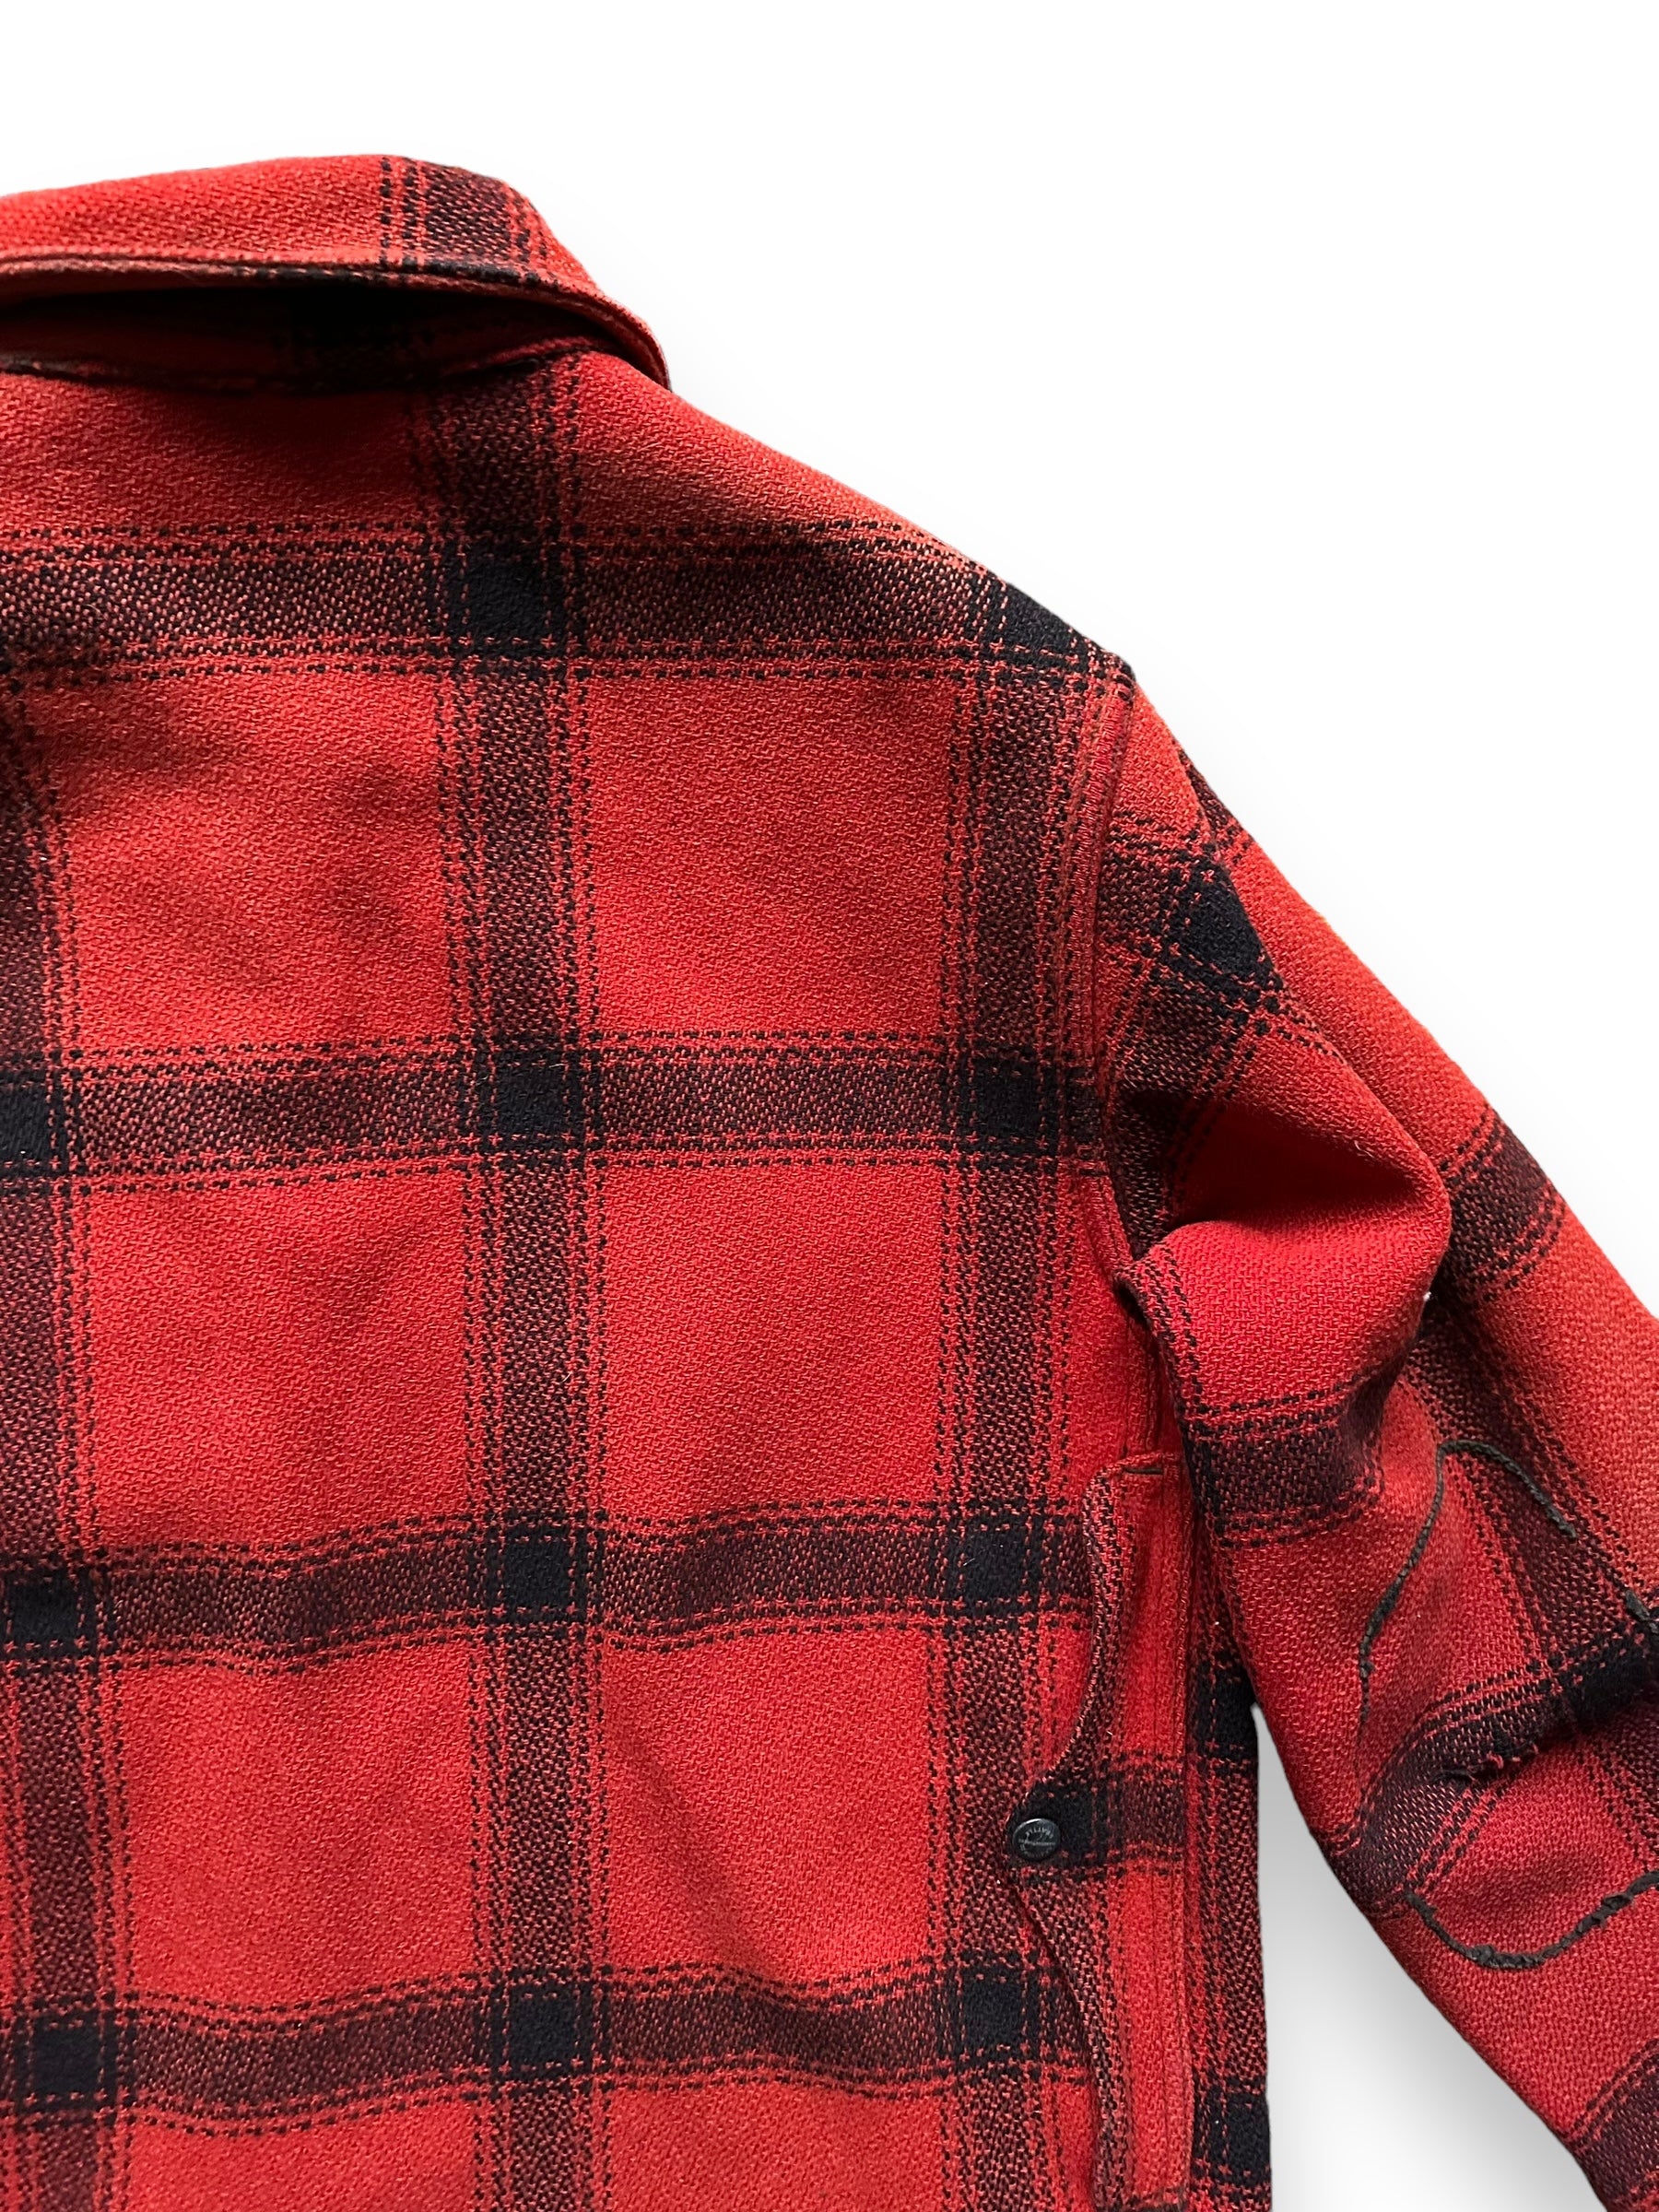 Rear RIght Shoulder View of Vintage 75% Red Filson Hunter Wool Jacket SZ 44 | Vintage Filson Workwear Seattle | Vintage Workwear Seattle